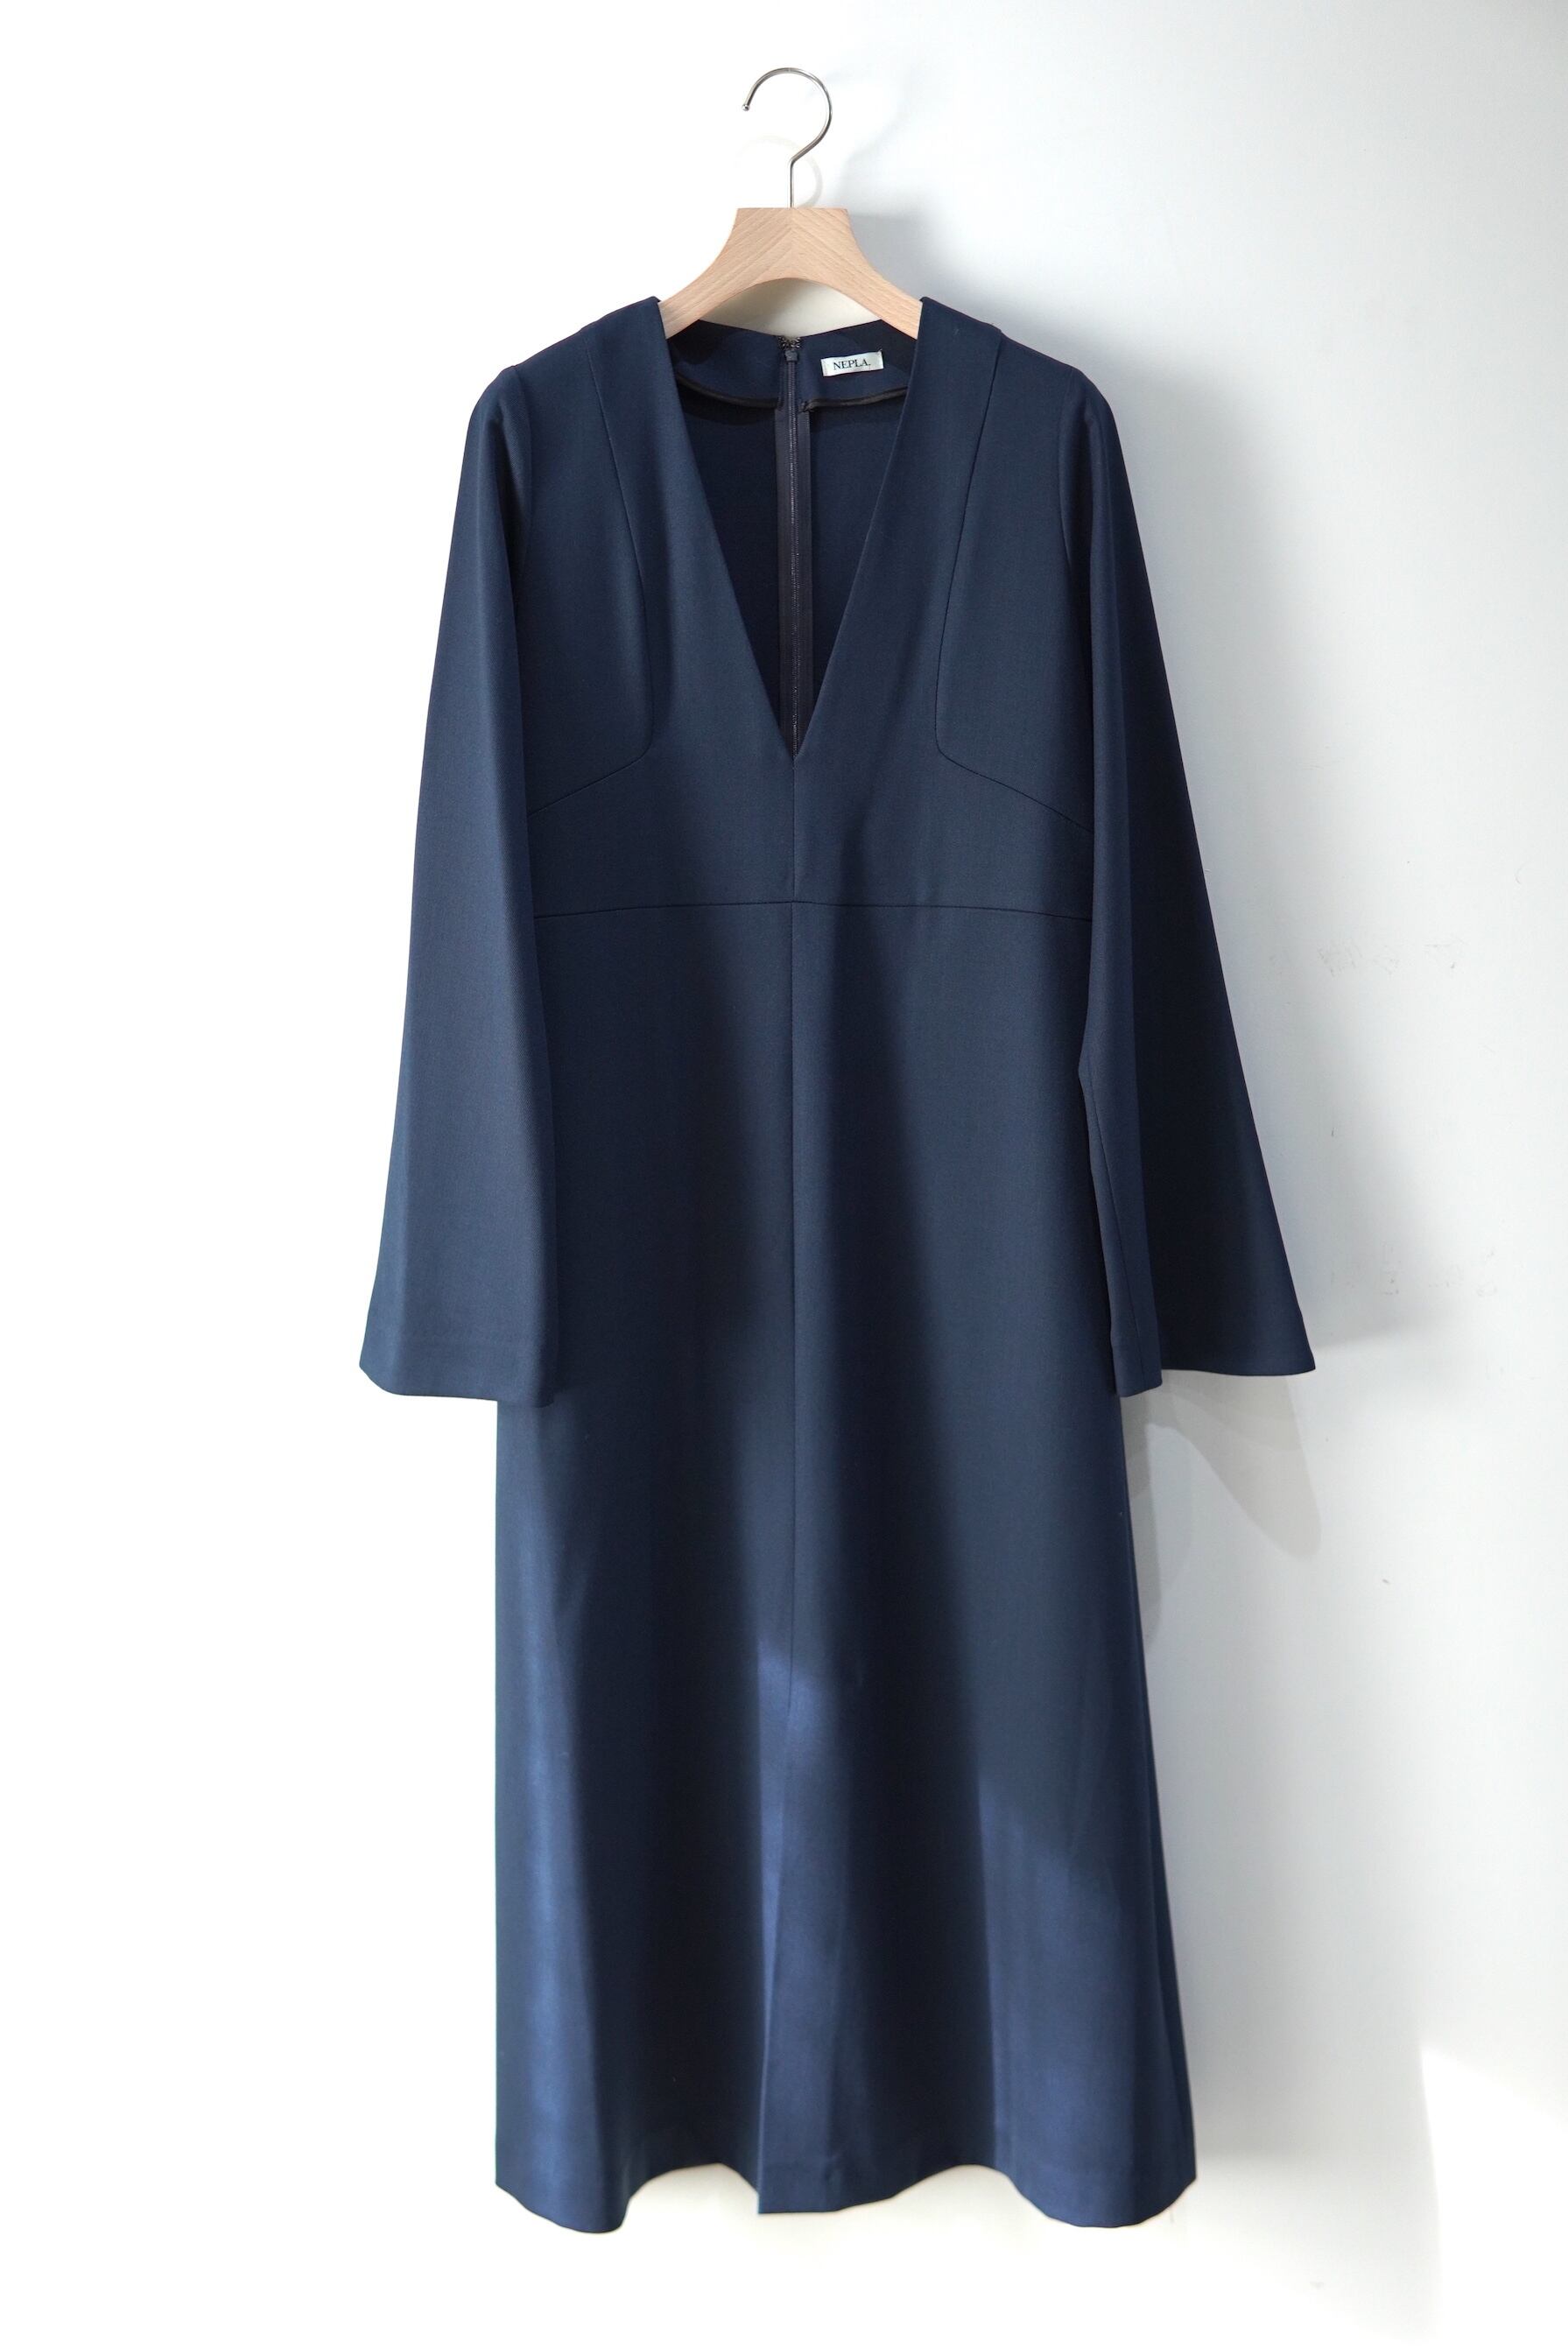 NEPLA  / Bell Sleeve Dress /  BLUE